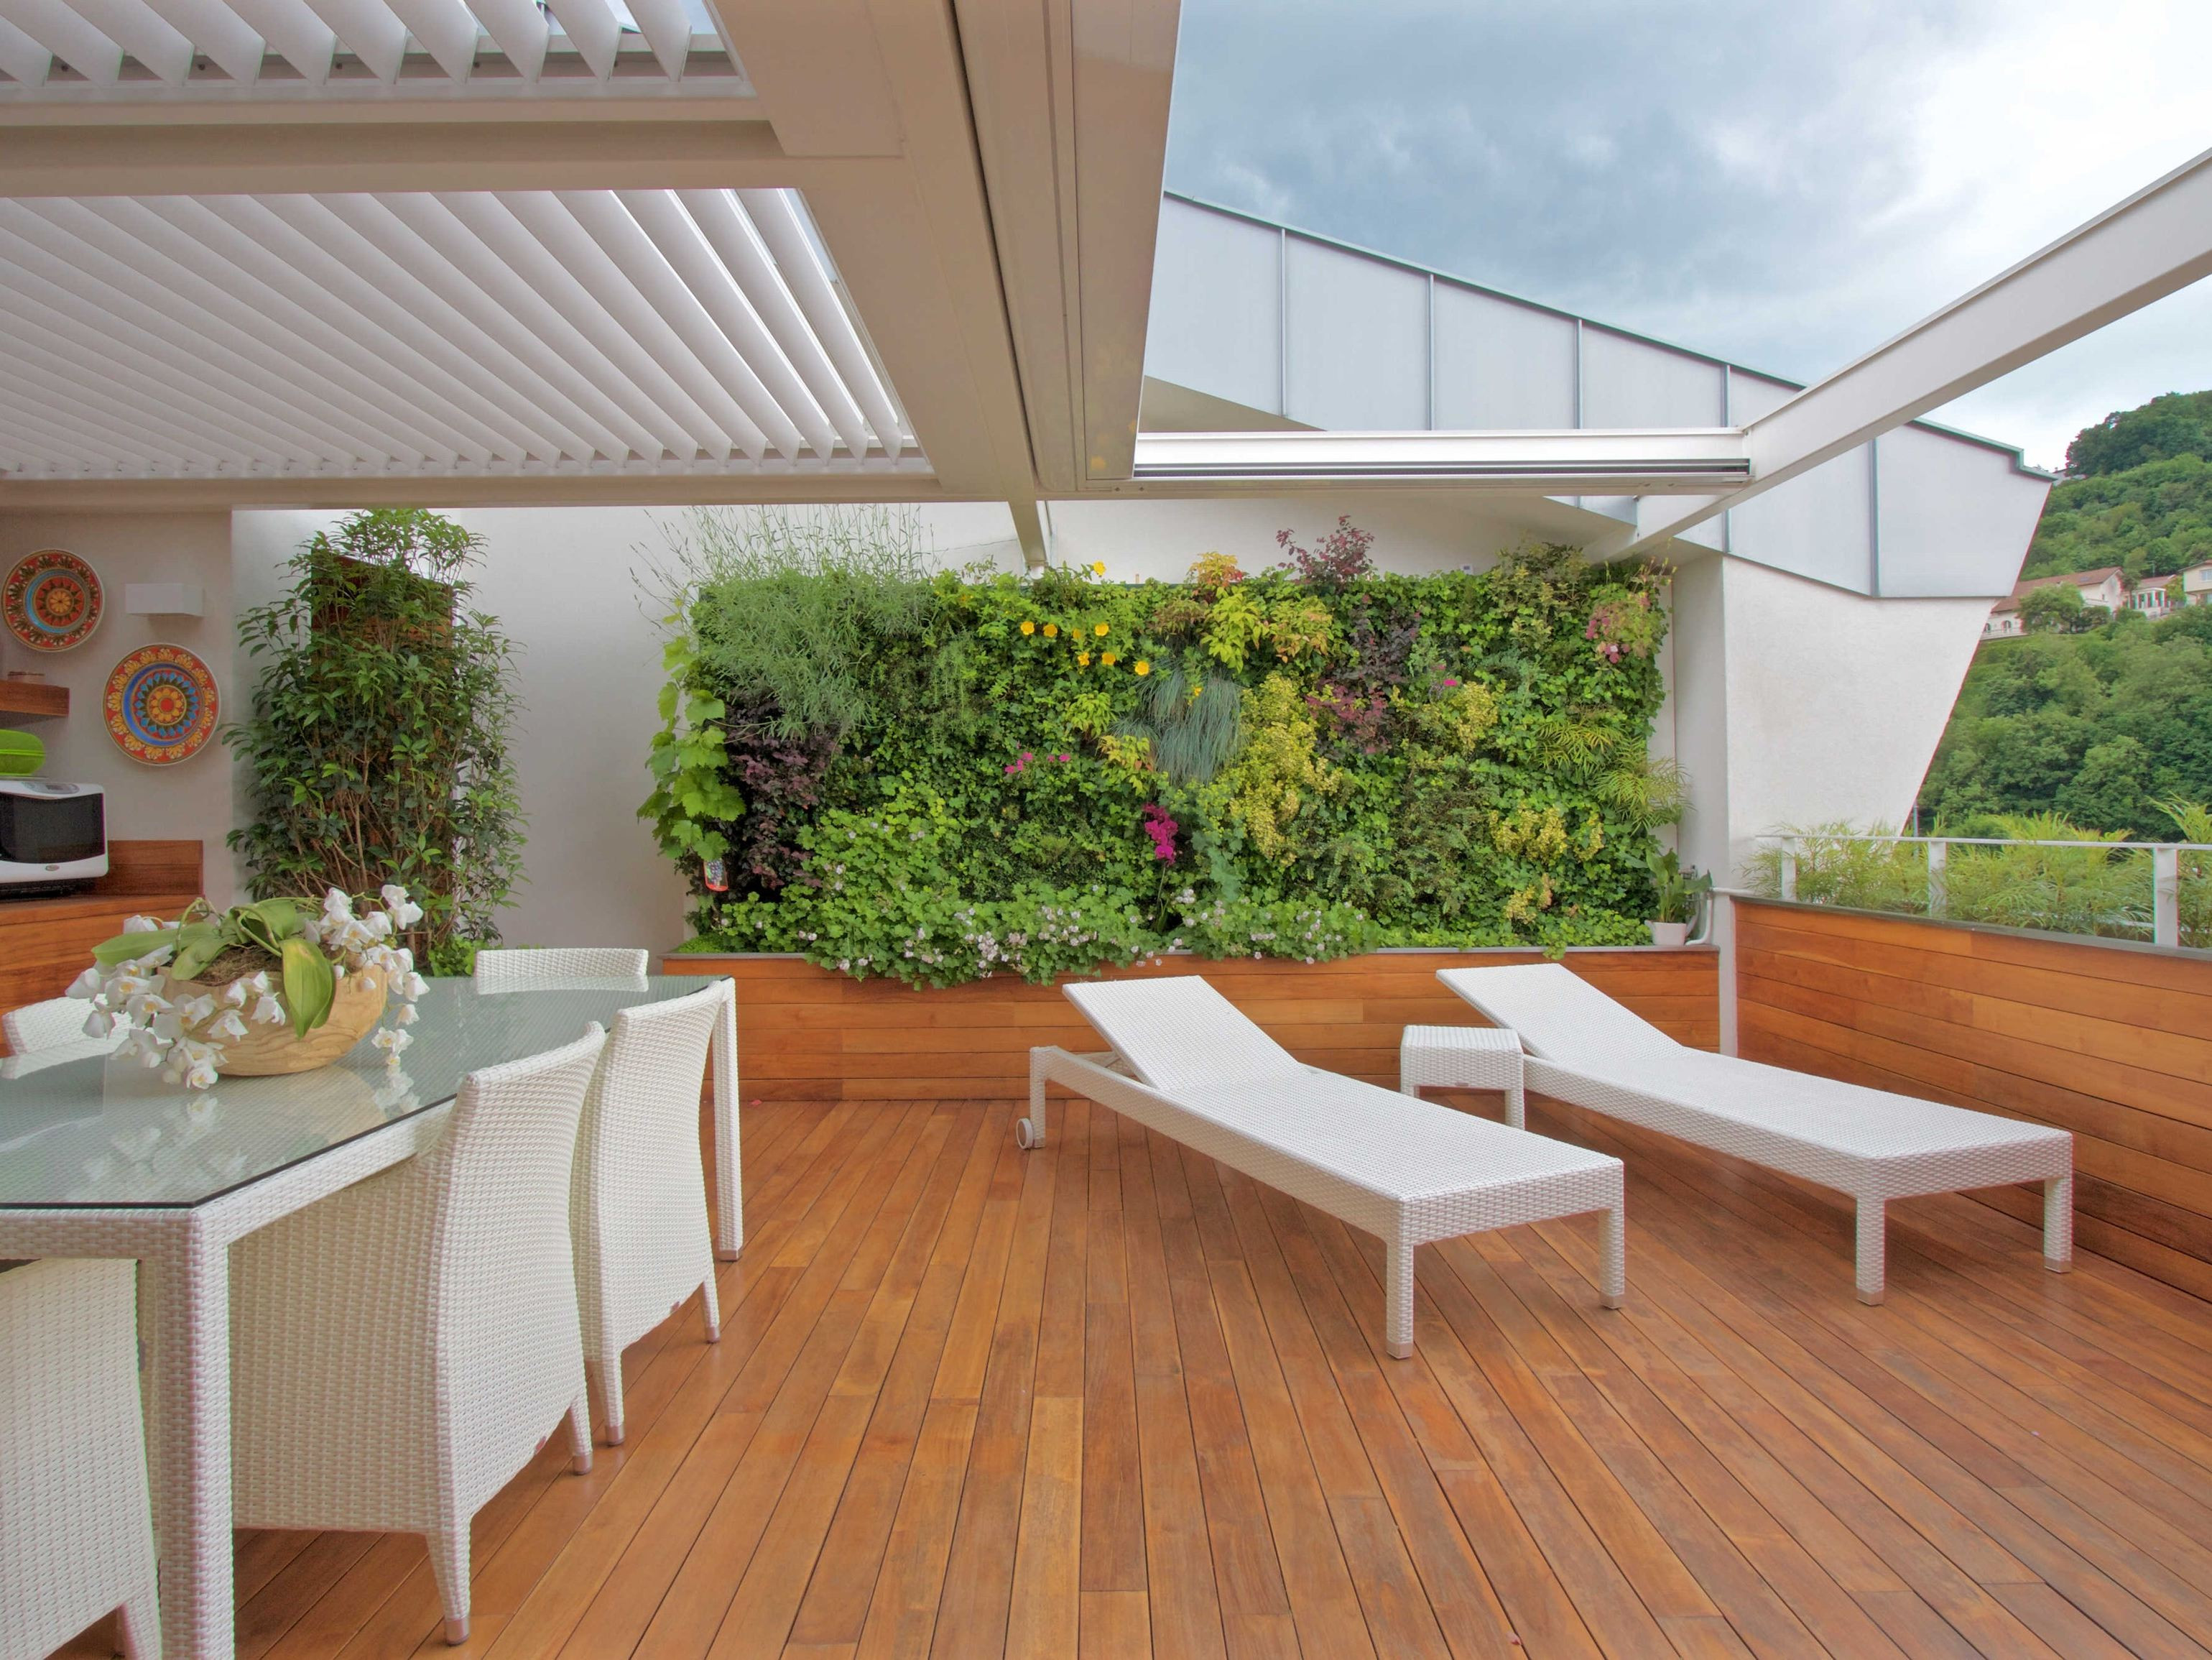 Best ideas about Outdoor Vertical Garden
. Save or Pin Outdoor vertical garden by SUNDAR ITALIA Now.